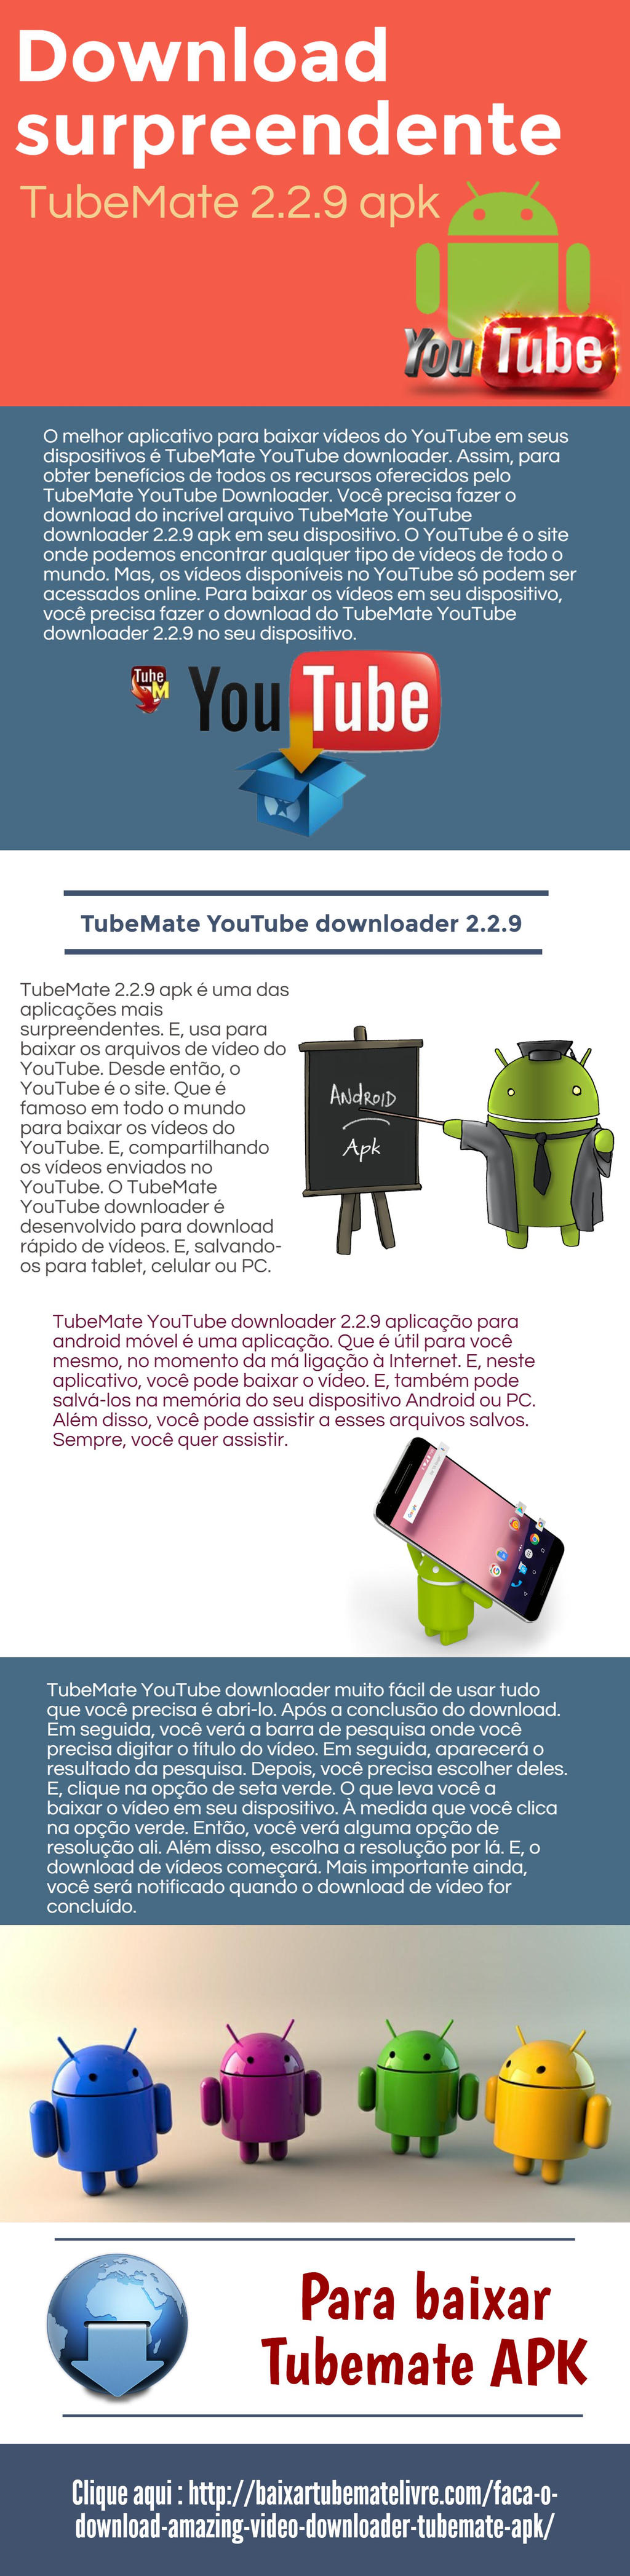 Roblox para Samsung Galaxy Tab E - Baixar arquivo apk